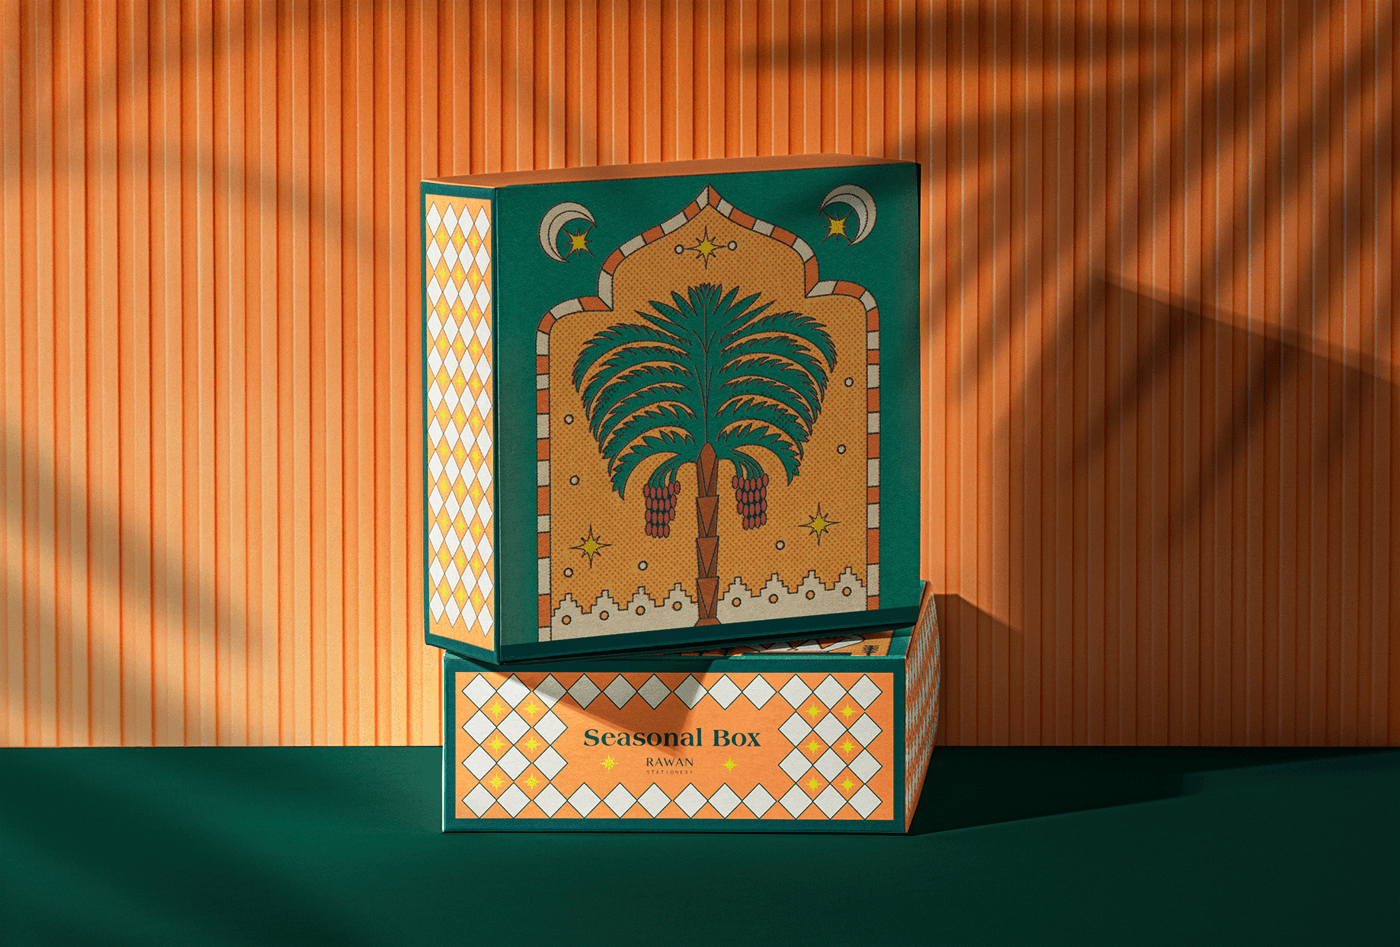 KSA Saudi Arabia riyadh Packaging packaging design visual identity ILLUSTRATION  arabic art direction  seasonal